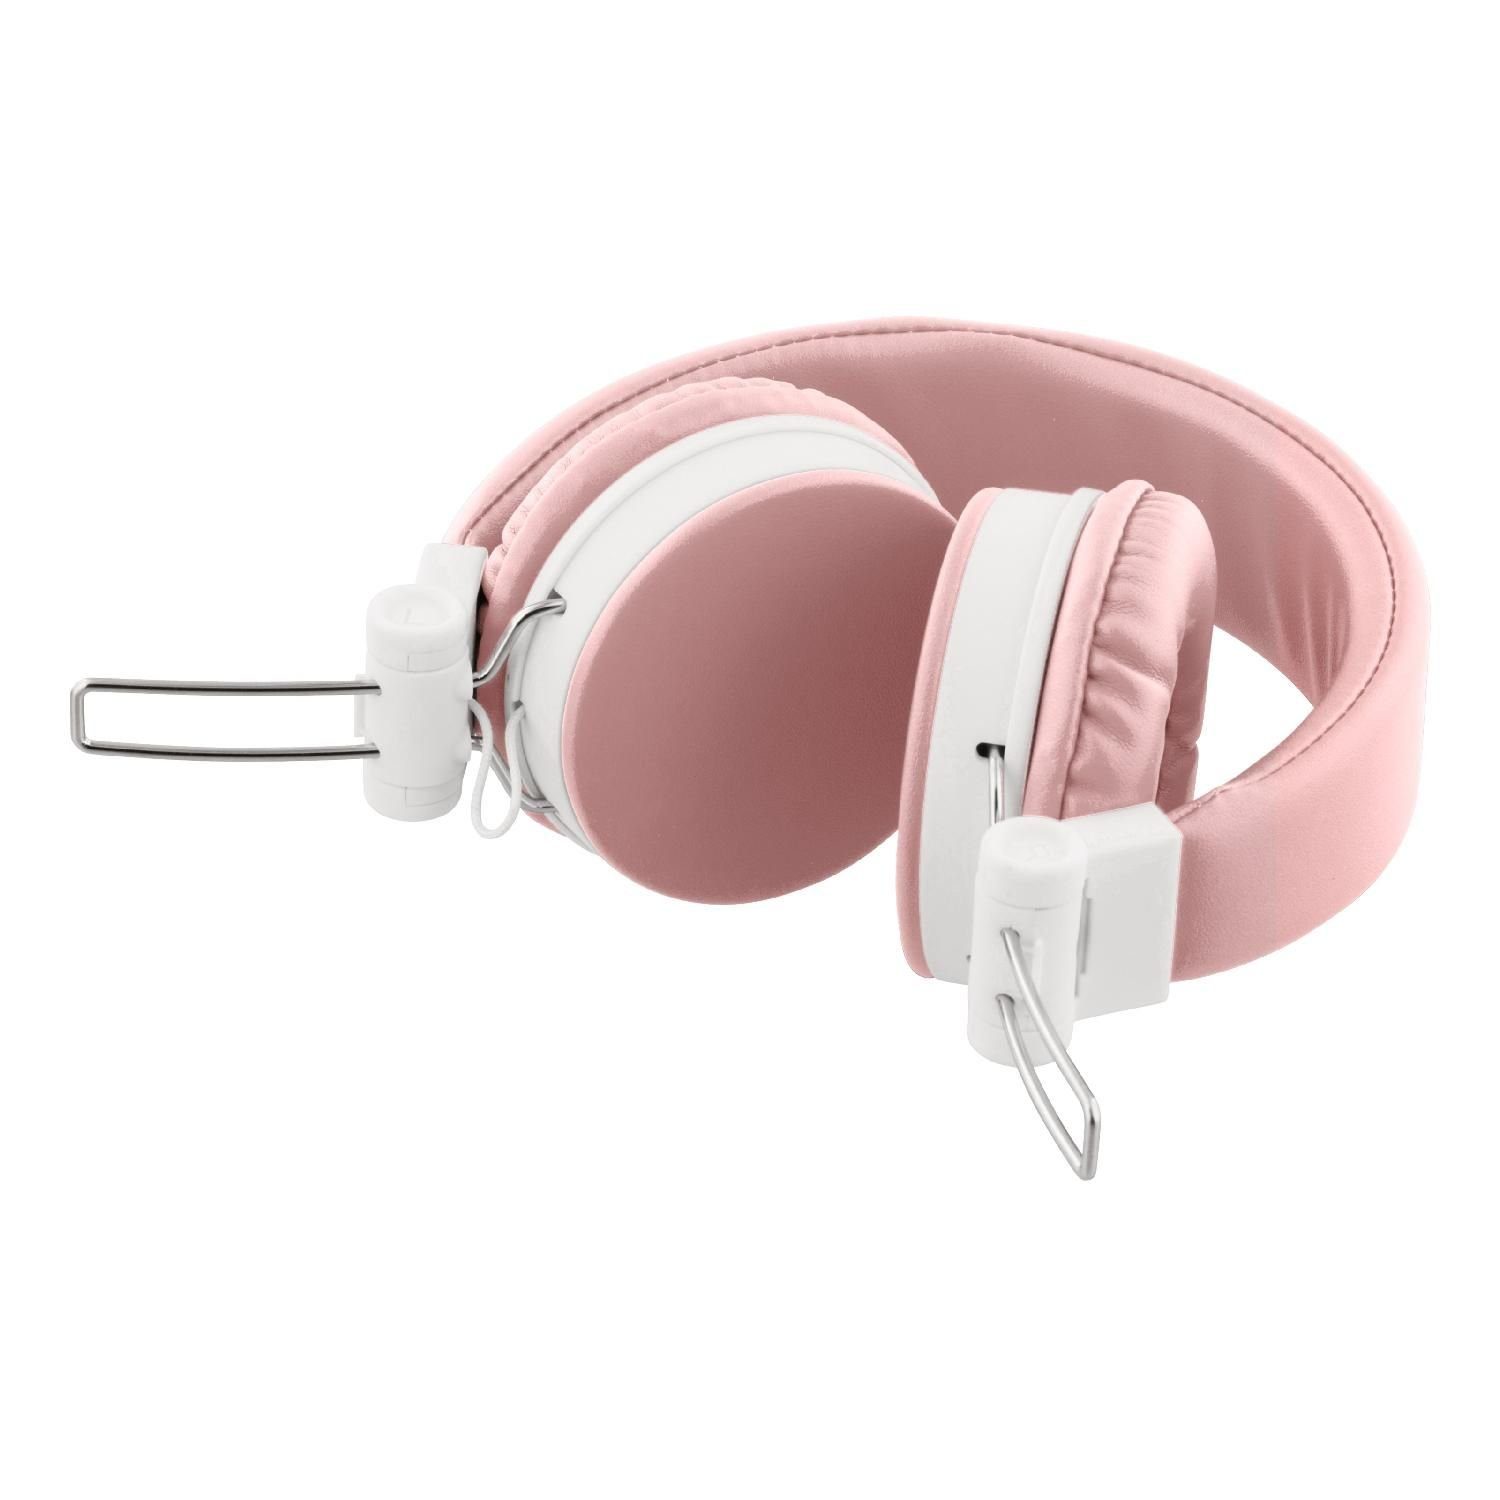 STREETZ Kopfhörer Jahre On-Ear-Kopfhörer 1,2m pink inkl. faltbares / Herstellergarantie) Klinkenanschluss rosa, 5 Kabel Mikrofon, Ohrpolster (integriertes Headset, 3.5mm